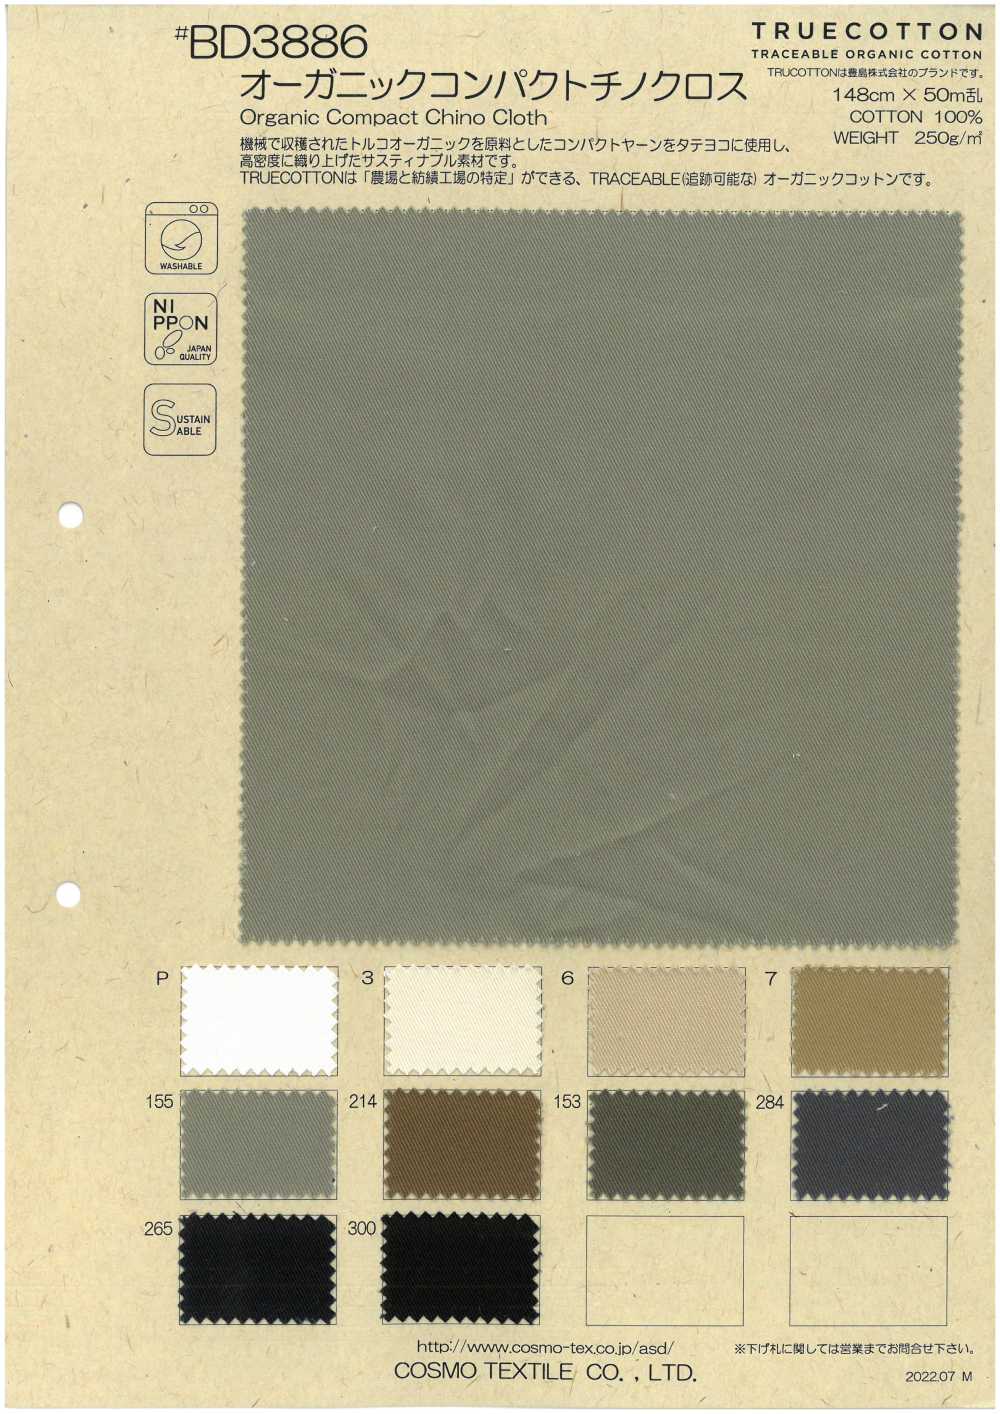 BD3886 Chino-Tuch Aus Bio-Kompaktgarn[Textilgewebe] COSMO TEXTILE